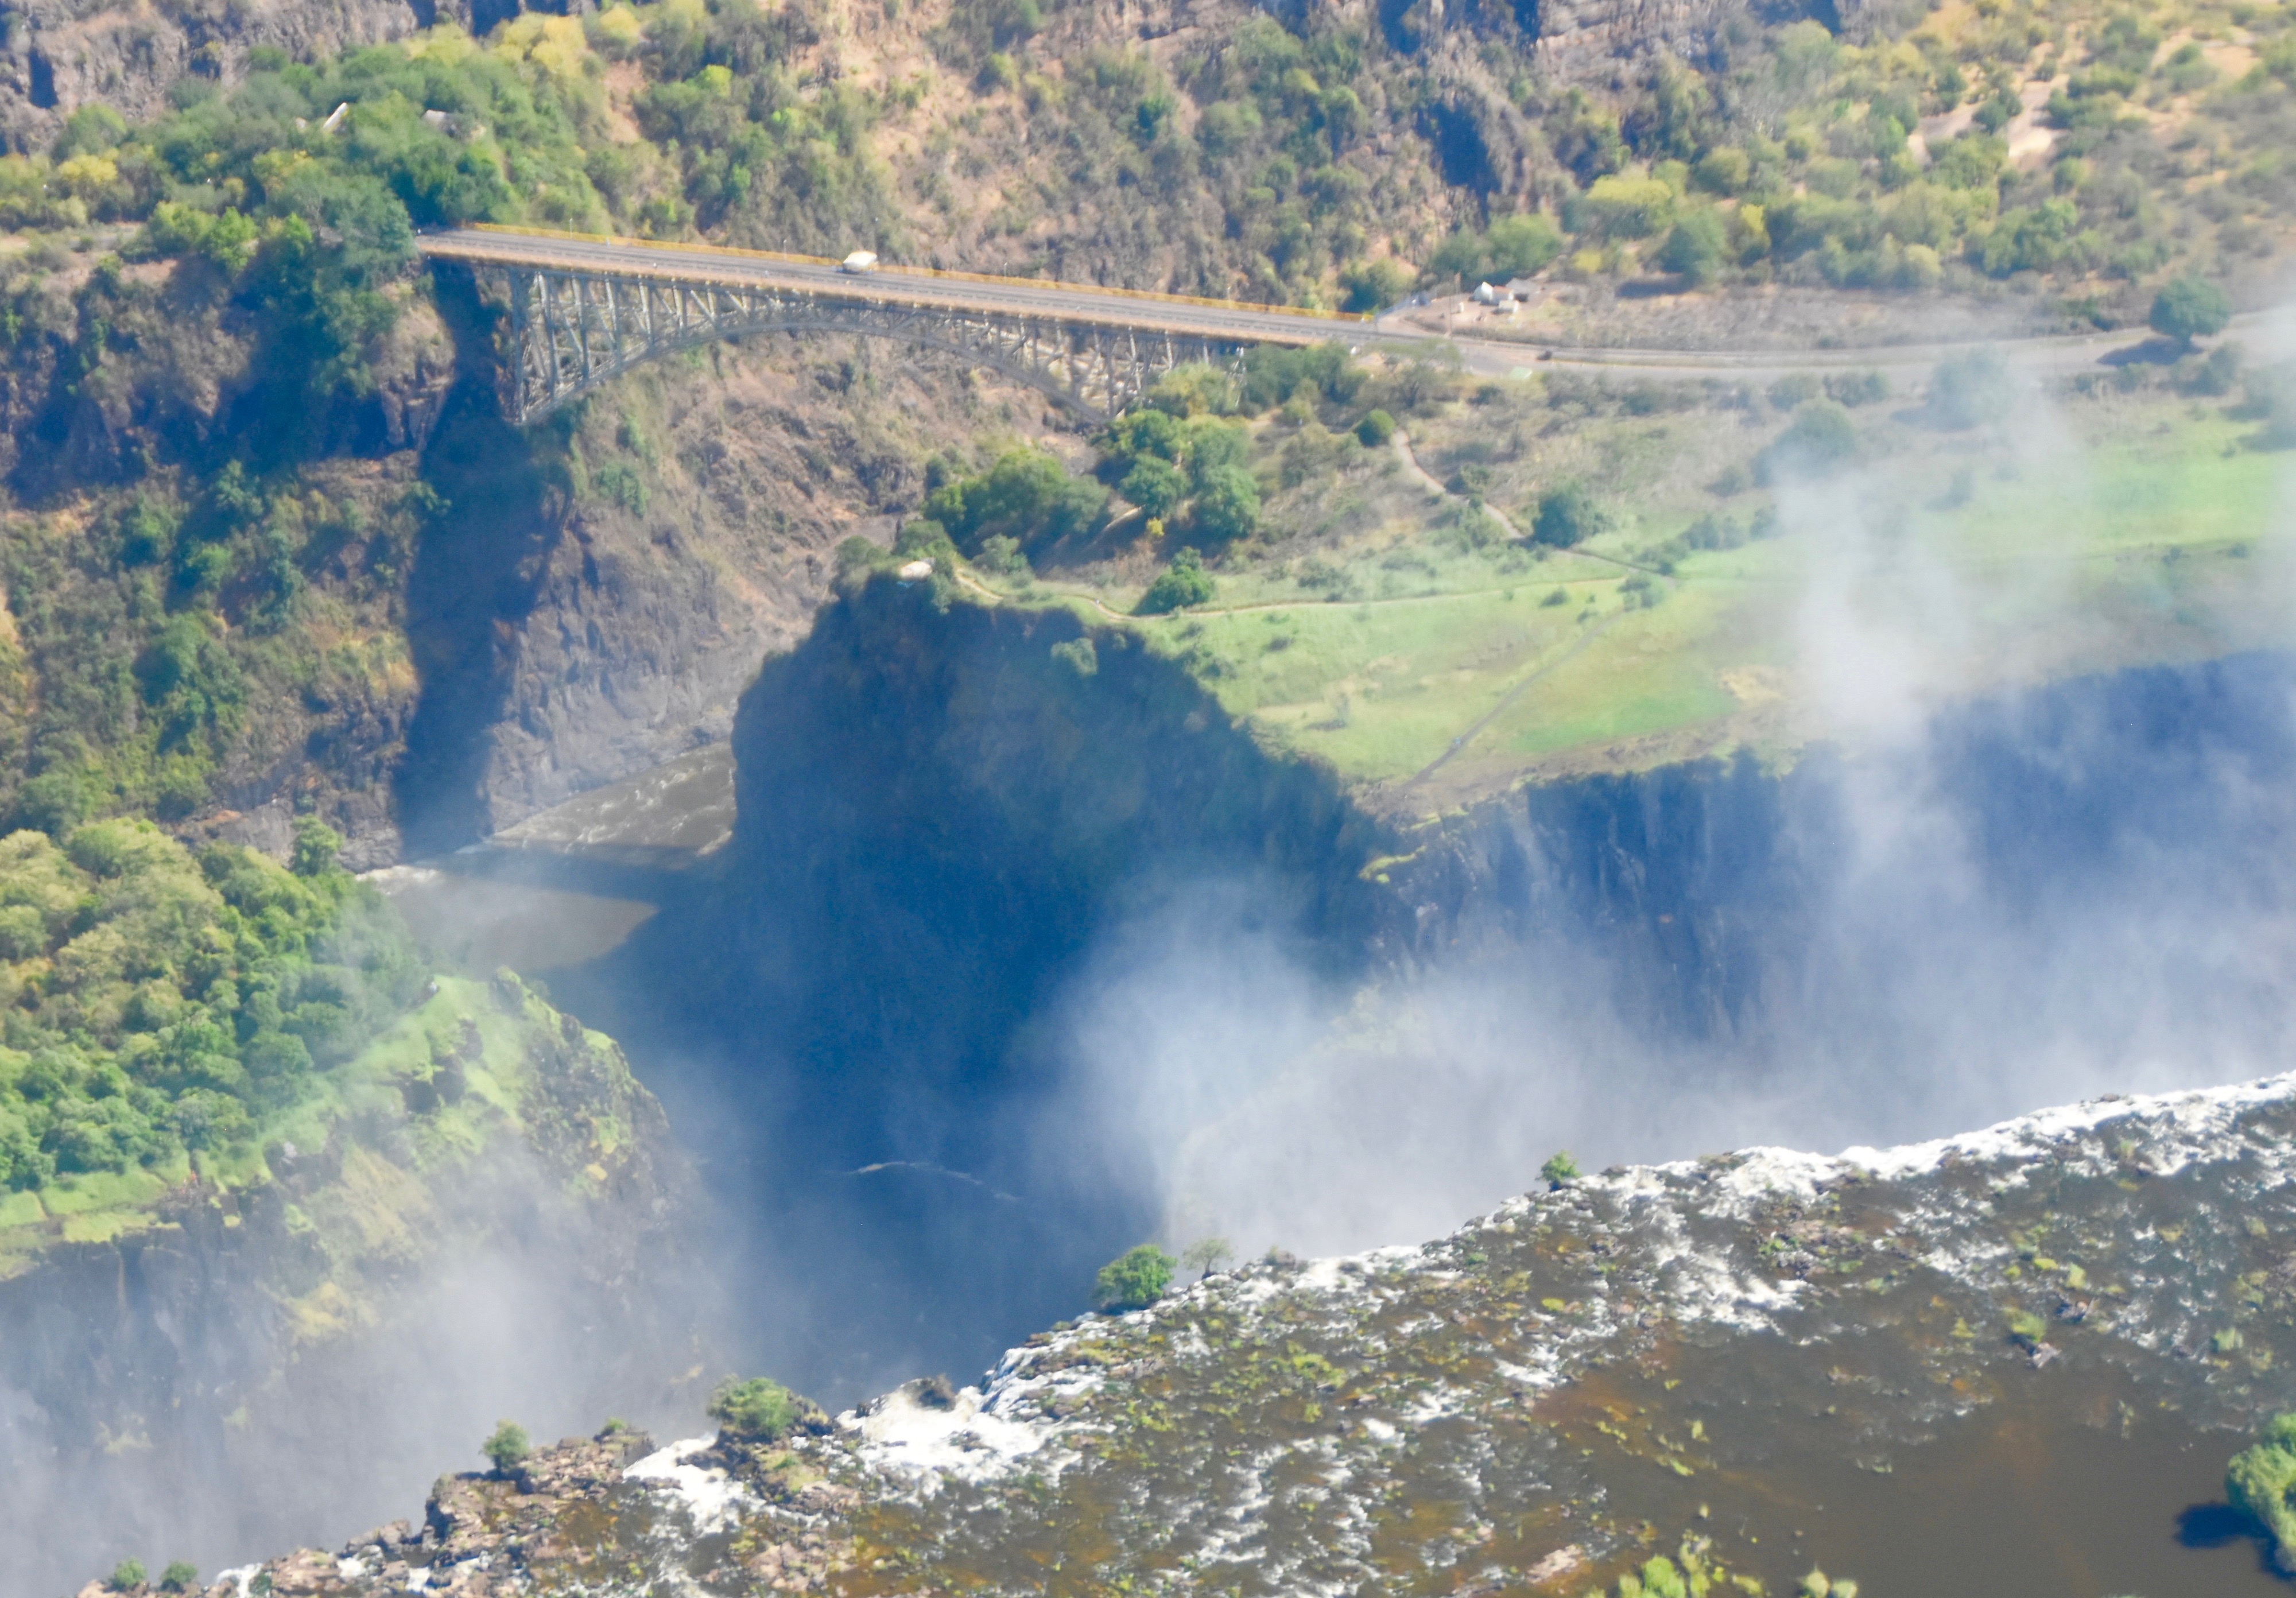 Bridge Over Victoria Falls